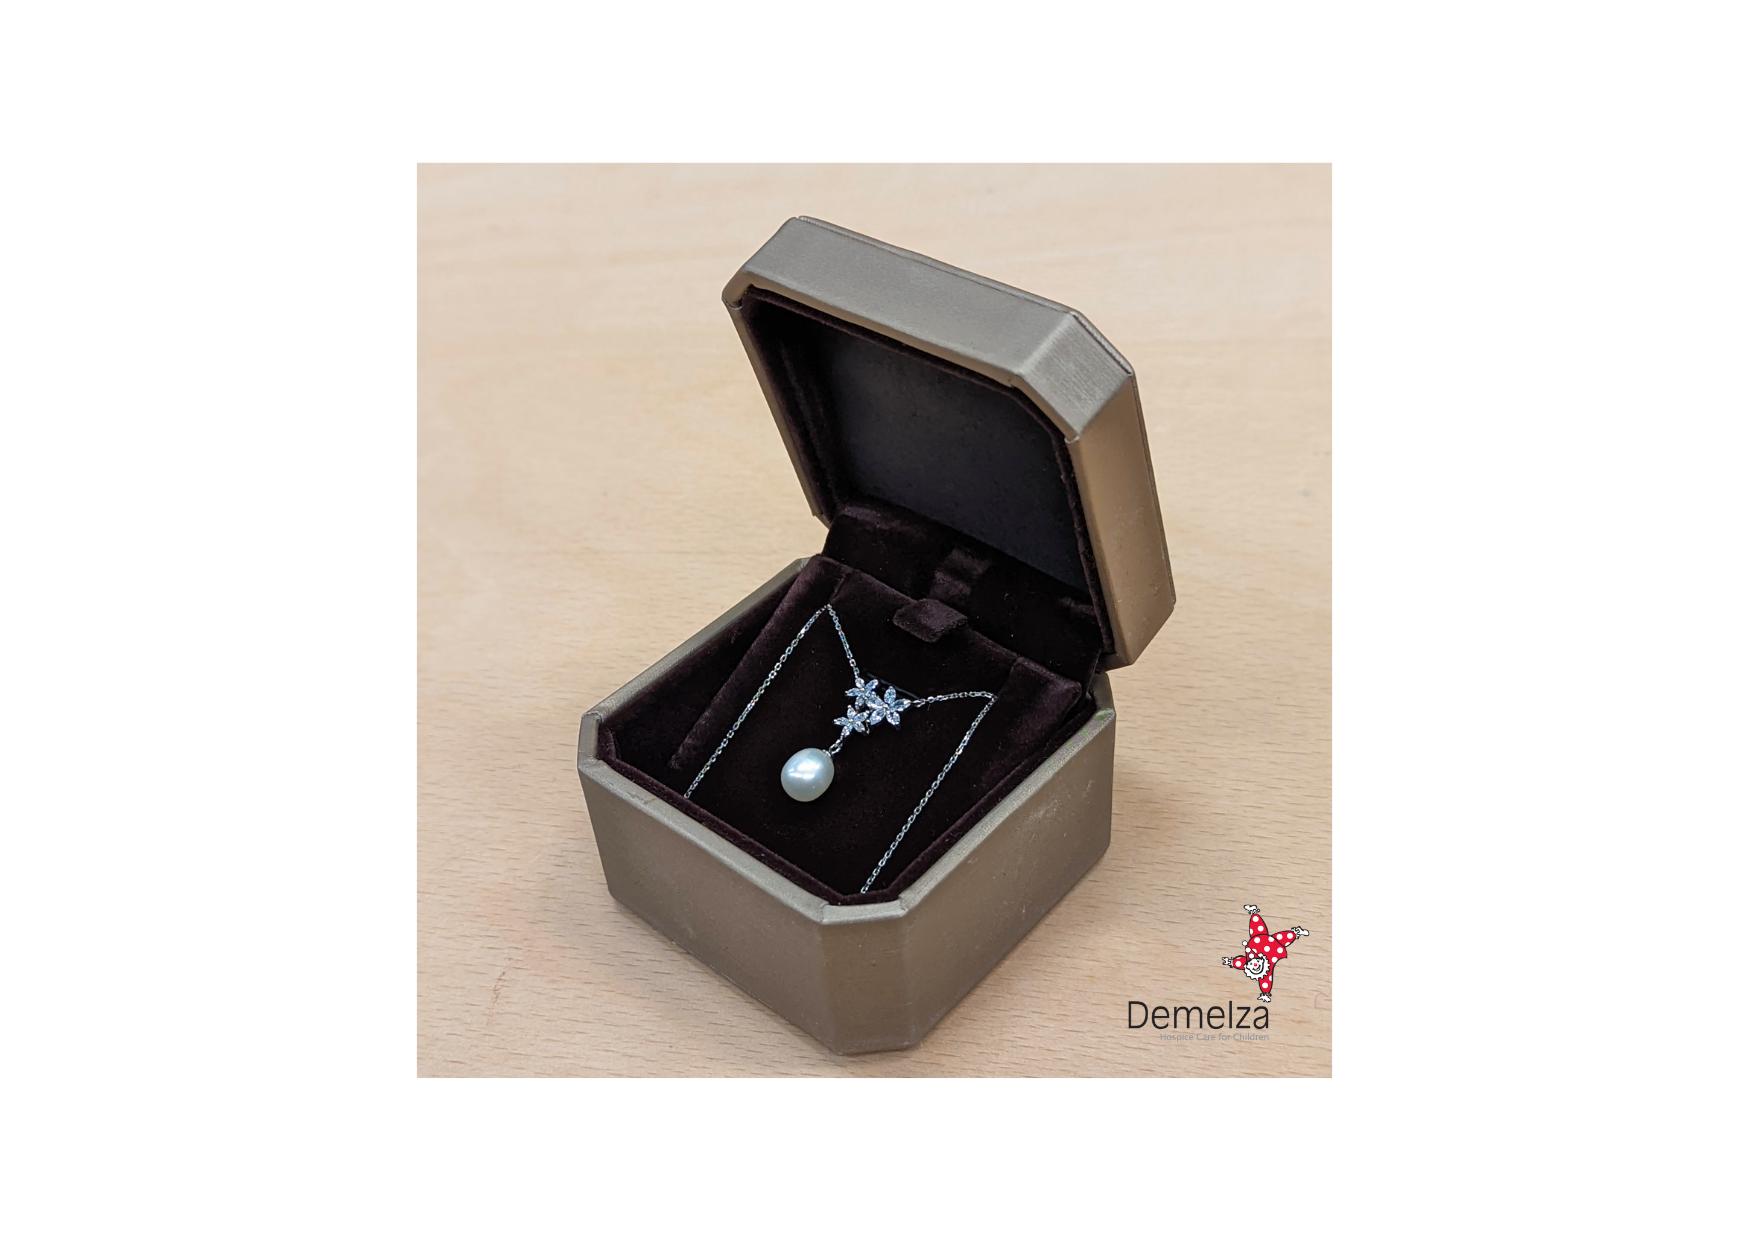 Star and pearl design pendant necklace in presentation box 